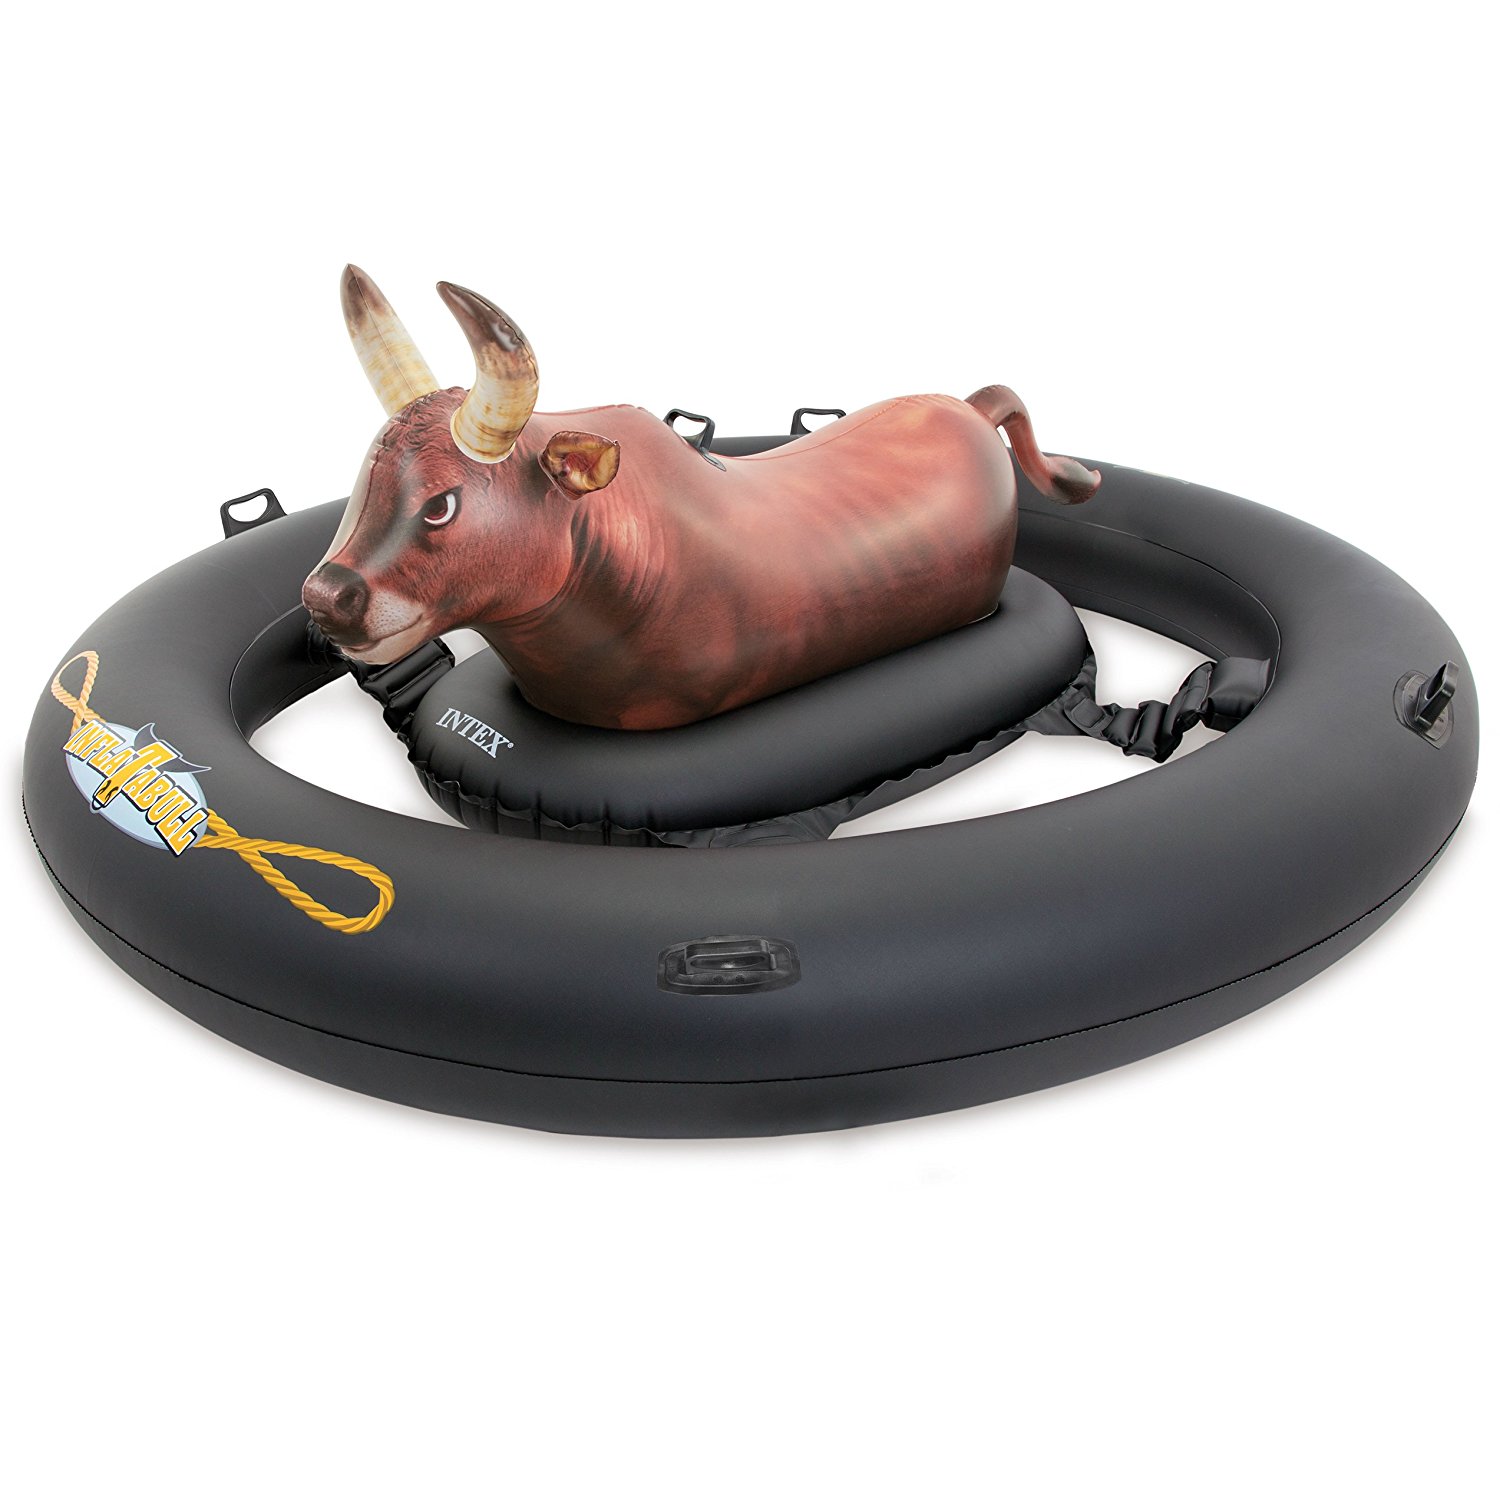 Bucking Bull Pool Float